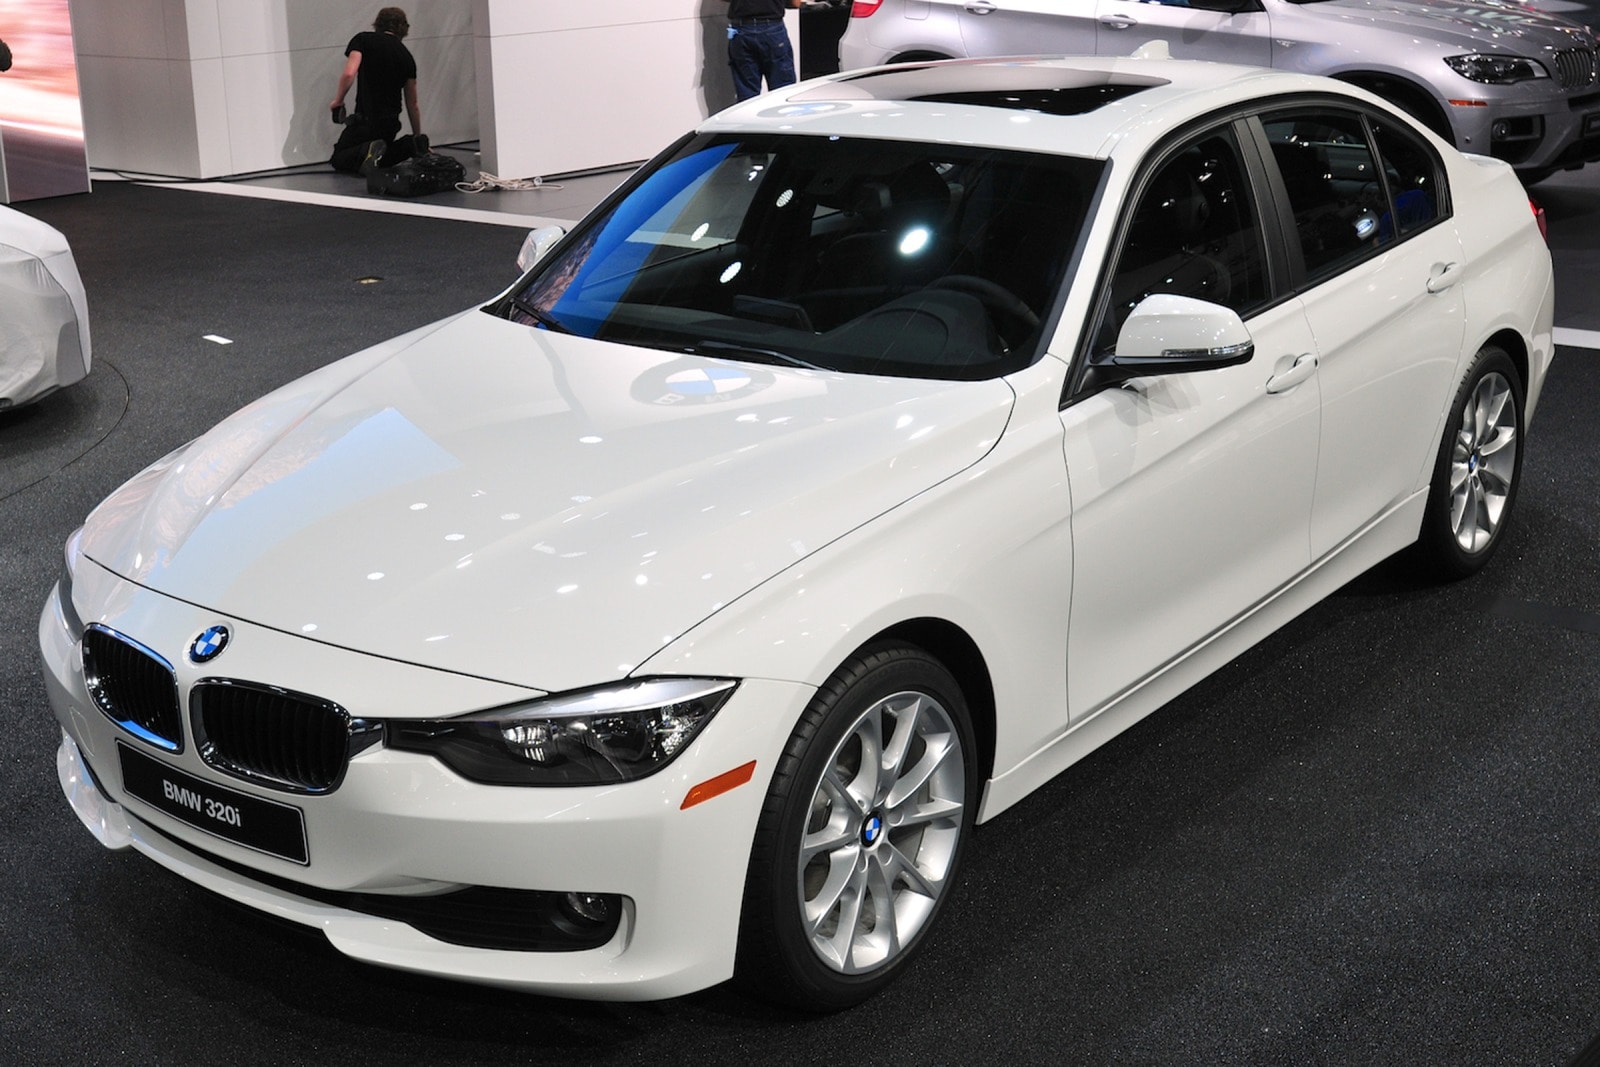 Used 2013 BMW 3 Series Sedan Review | Edmunds